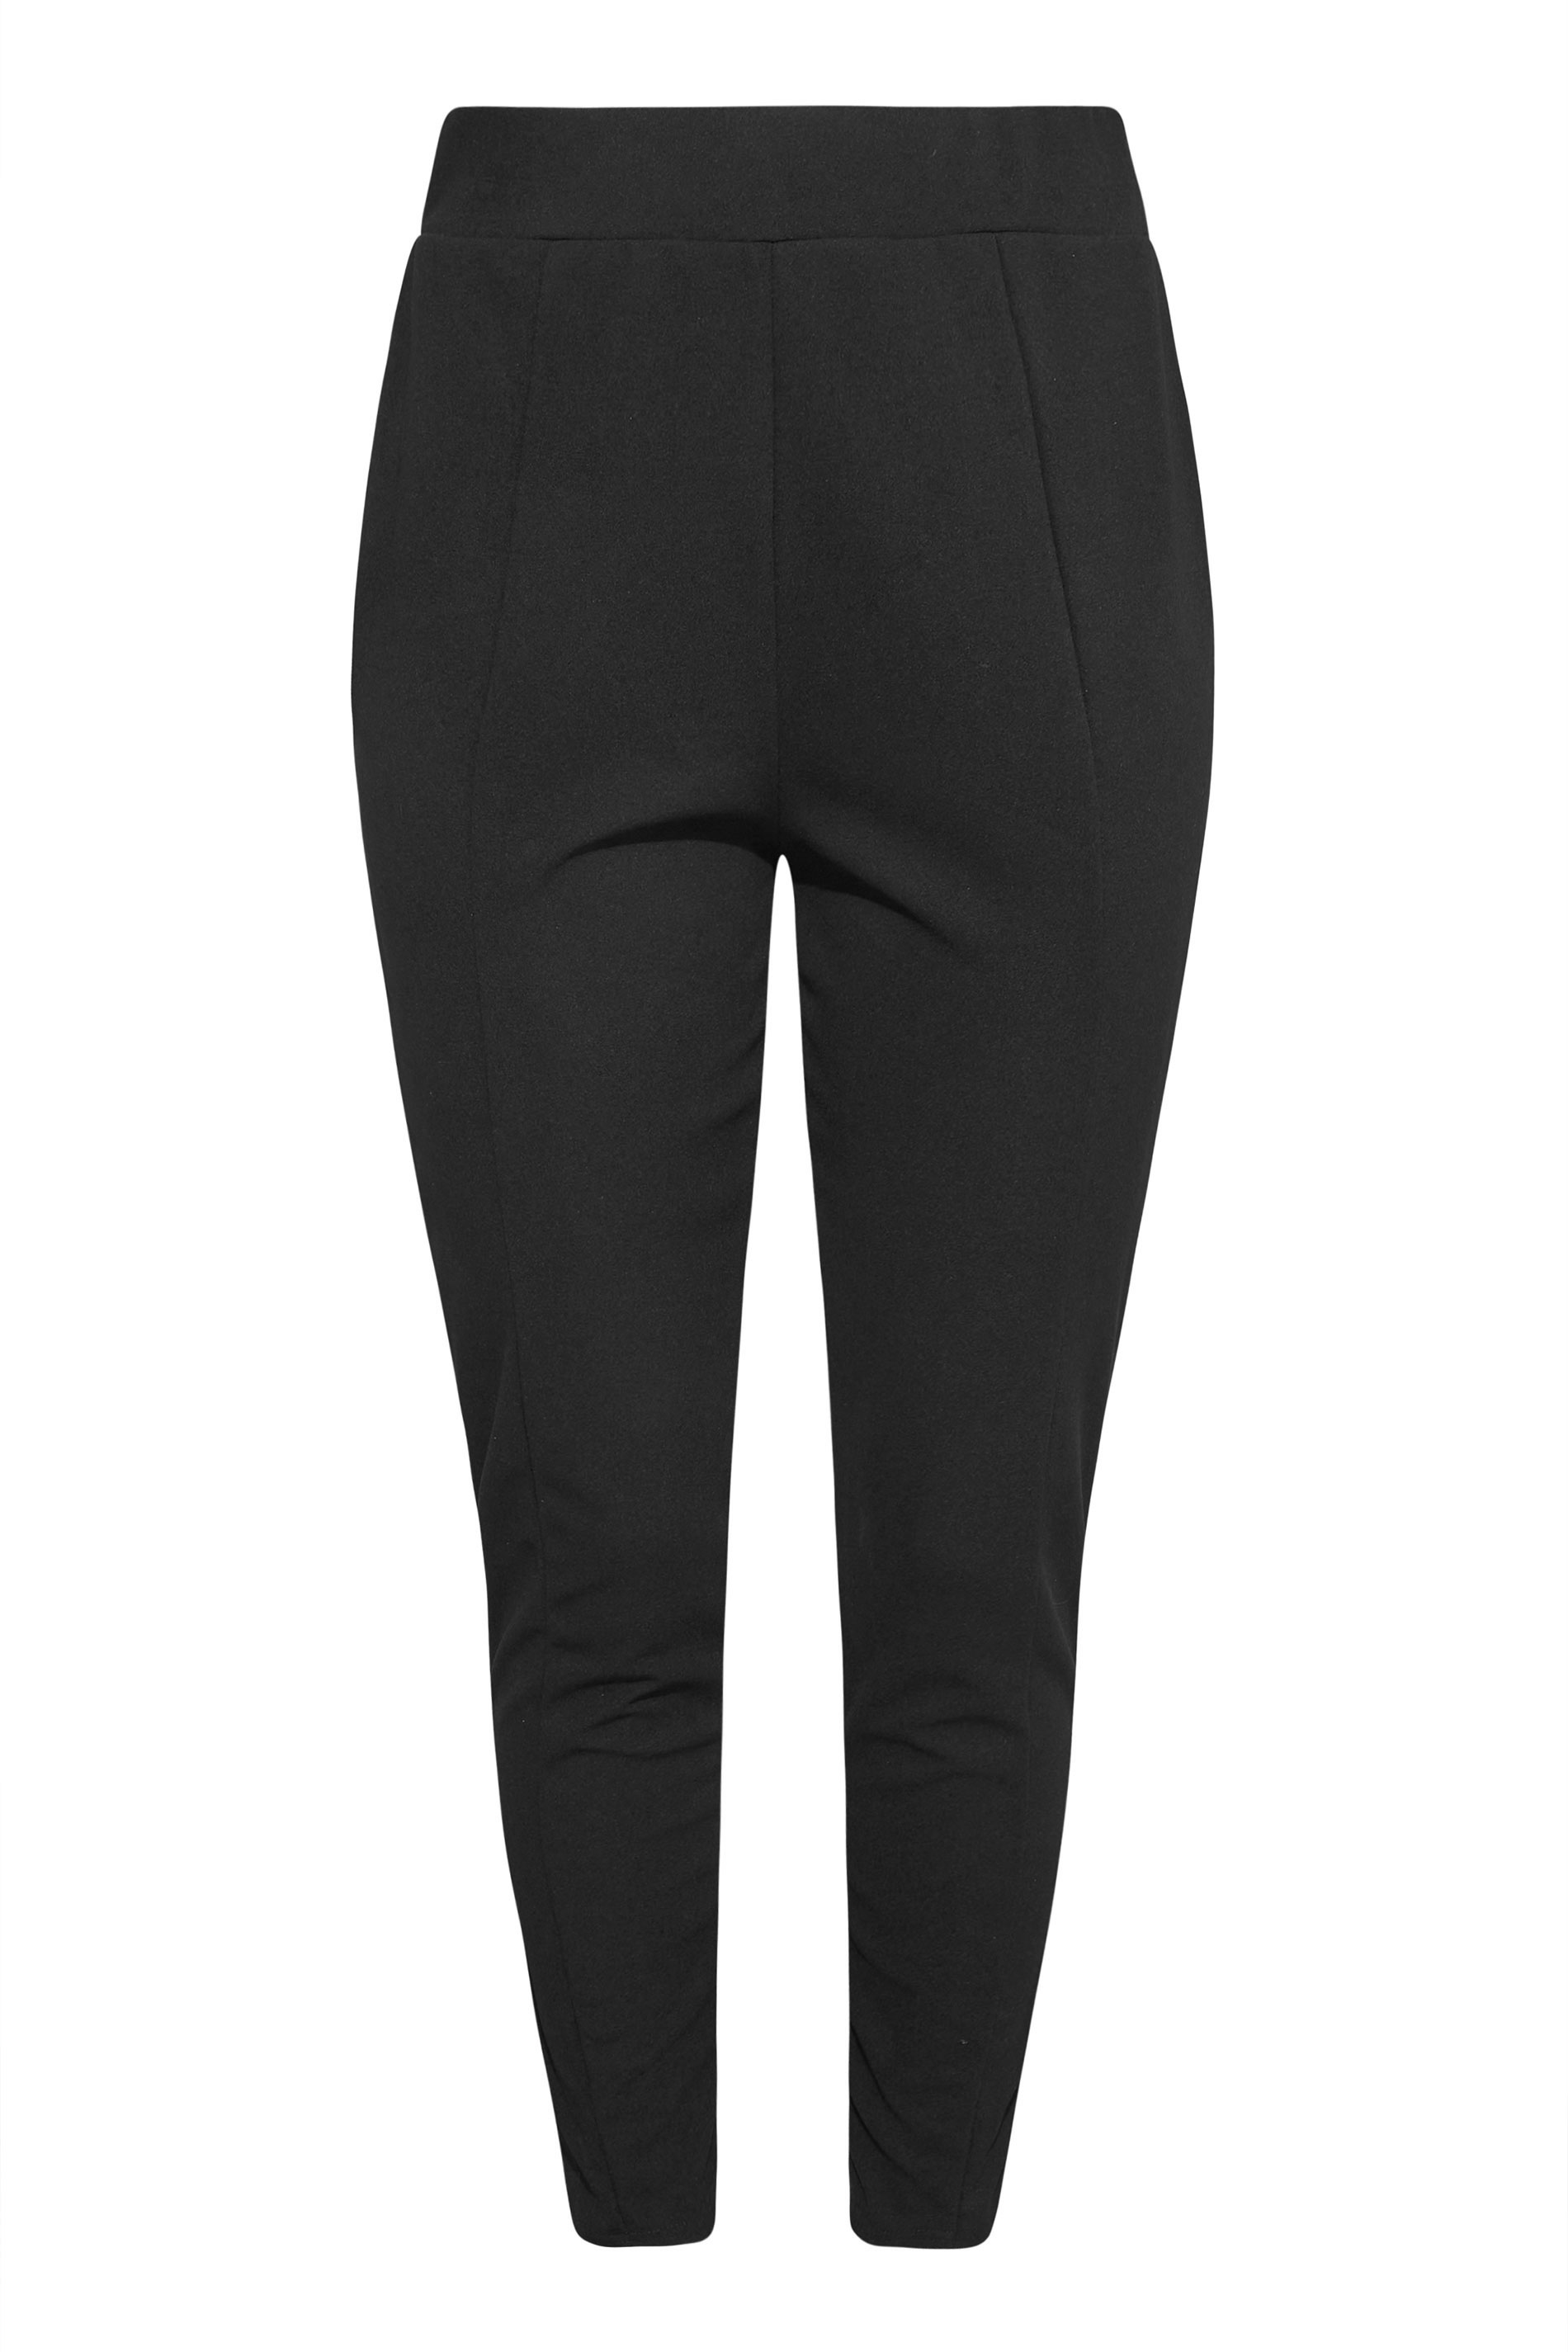 NEXT- Ladies Black Wide Leg Trousers Size 18R | eBay